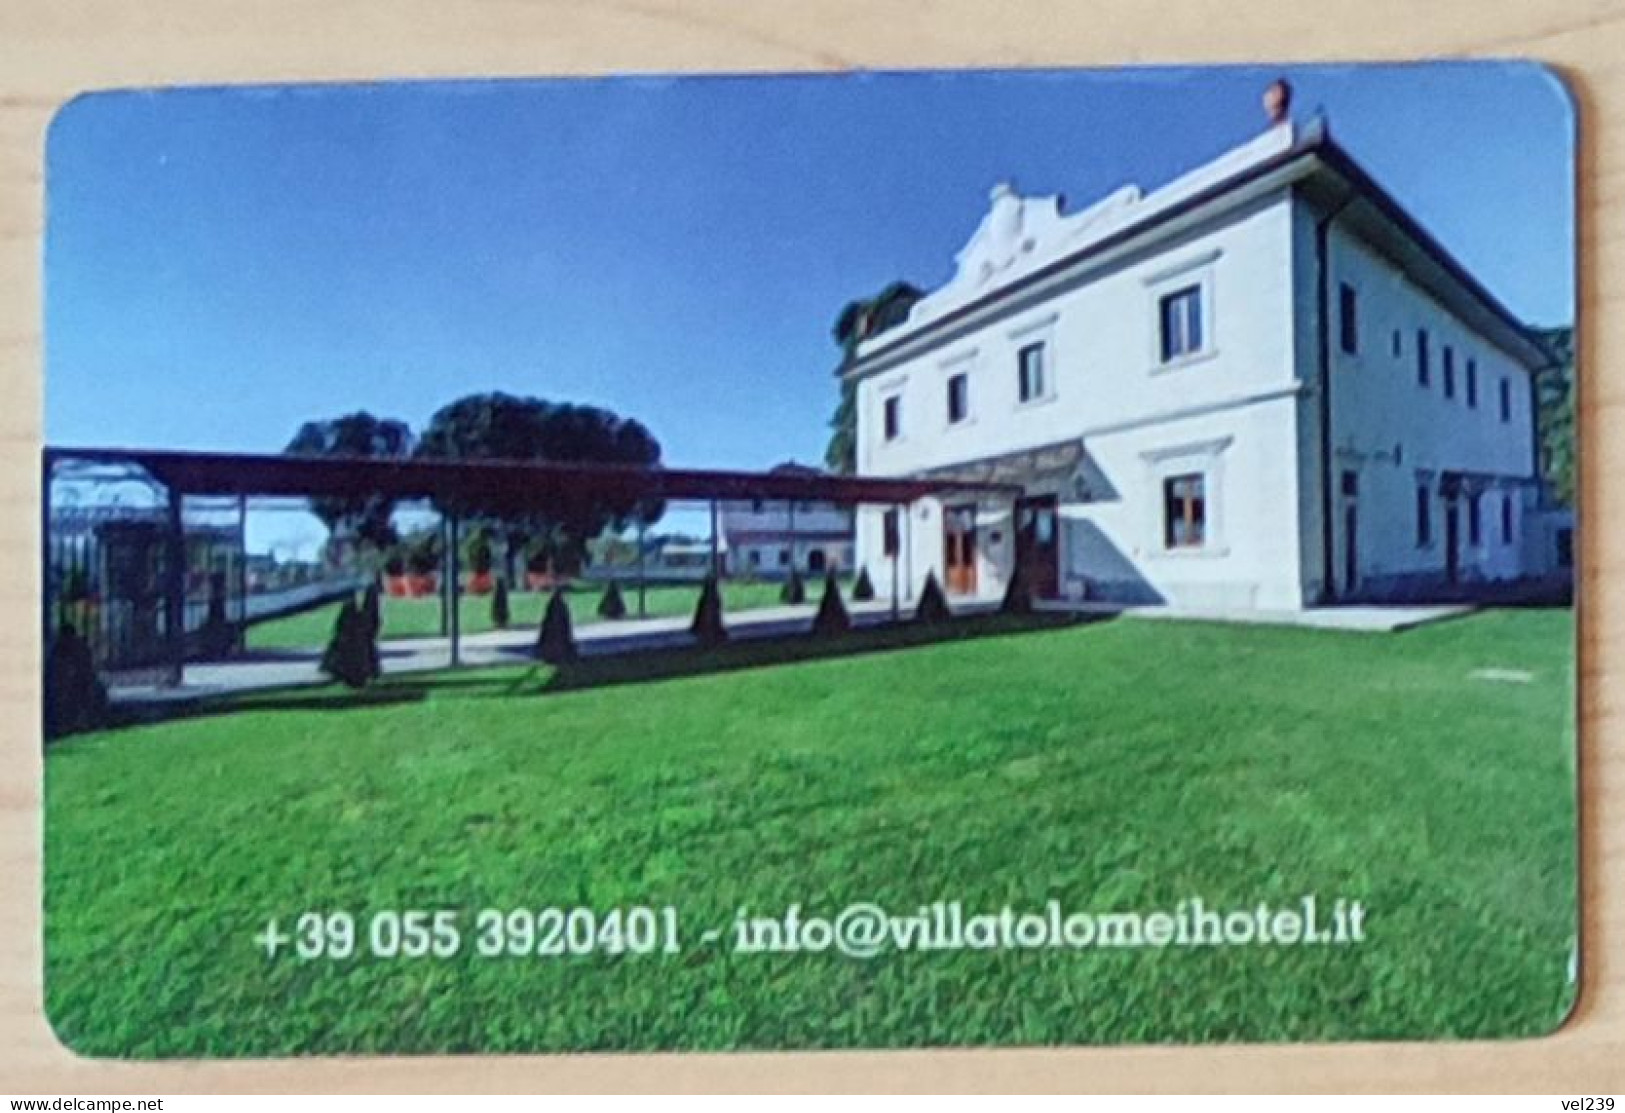 Italy. Villa Tolomei - Hotel Keycards